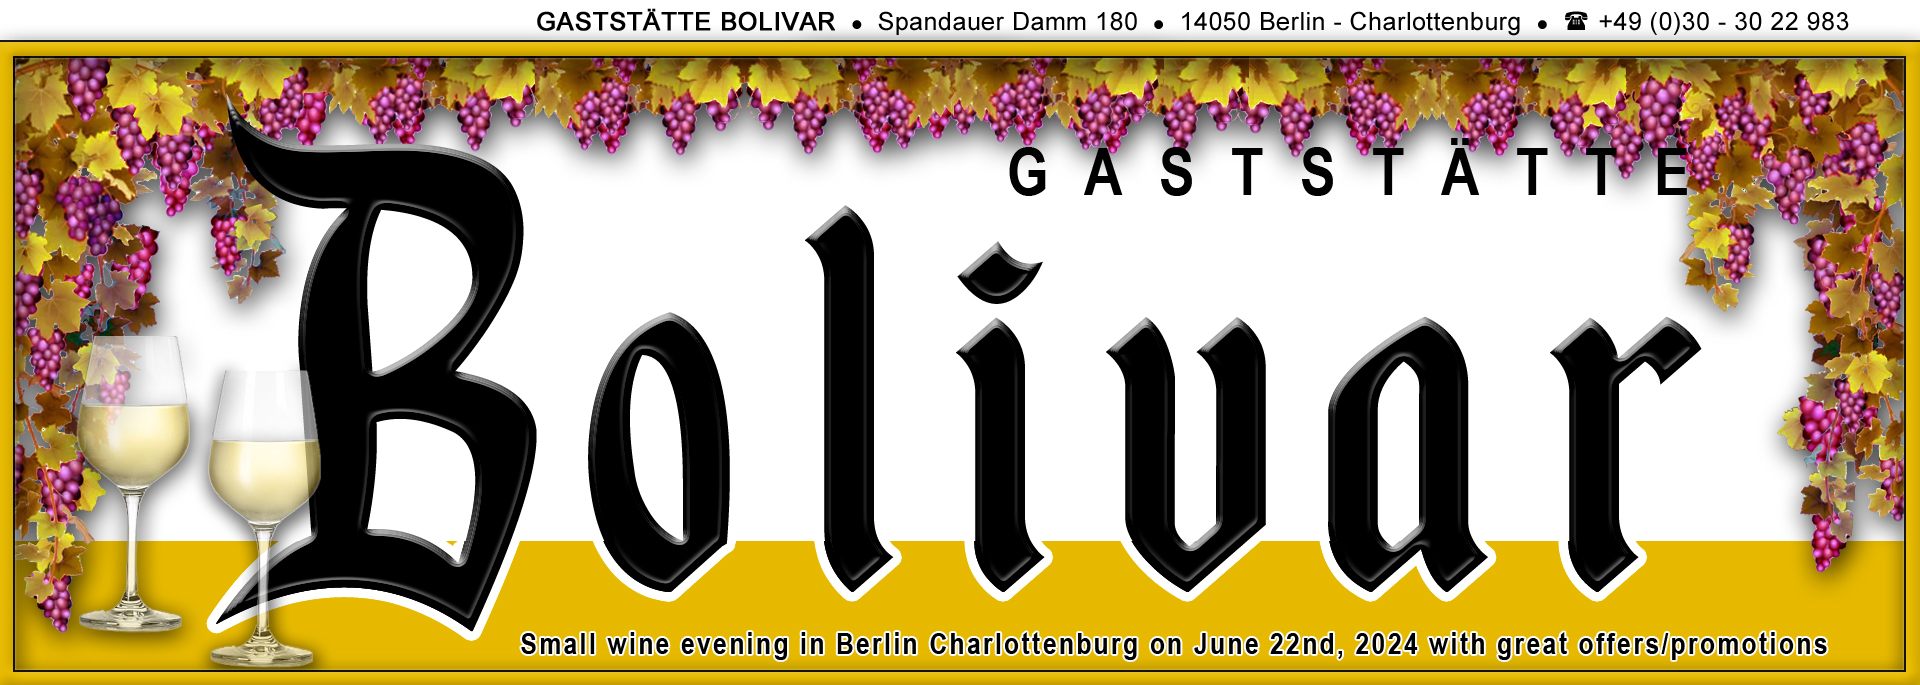 bolivar-berlin-charlottenburg-westend-where-to-in-berlin-celebration-wine-fest-evening-offers-single-vineyard-beer-garden